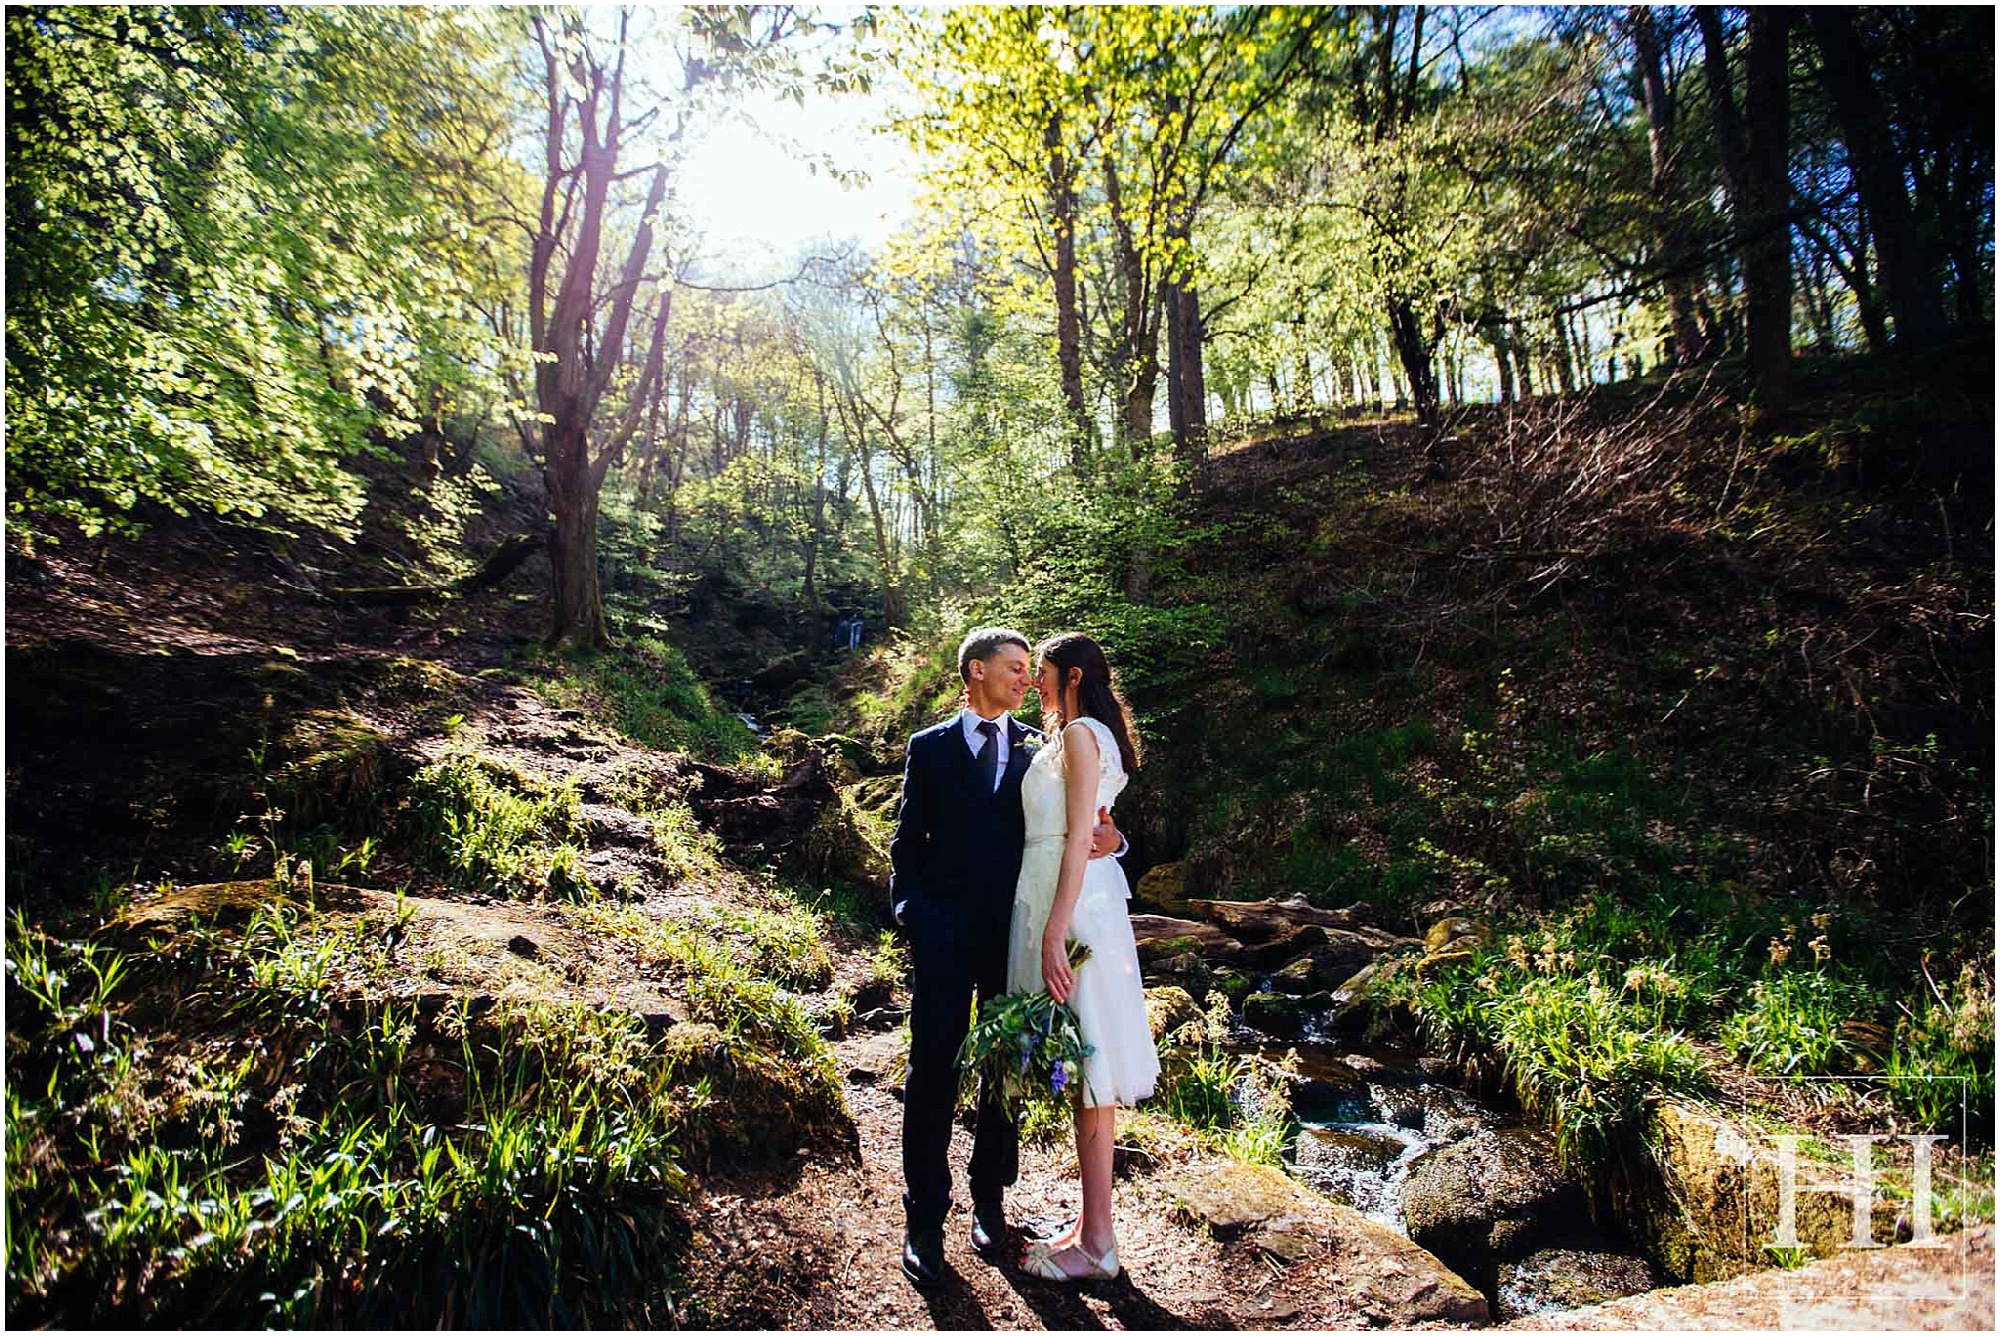 Gibson Mill Hardcastle Crags Wedding Photography photographer Hamish Irvine Leeds Helen Resh National Trust Hebden Bridge Manchester